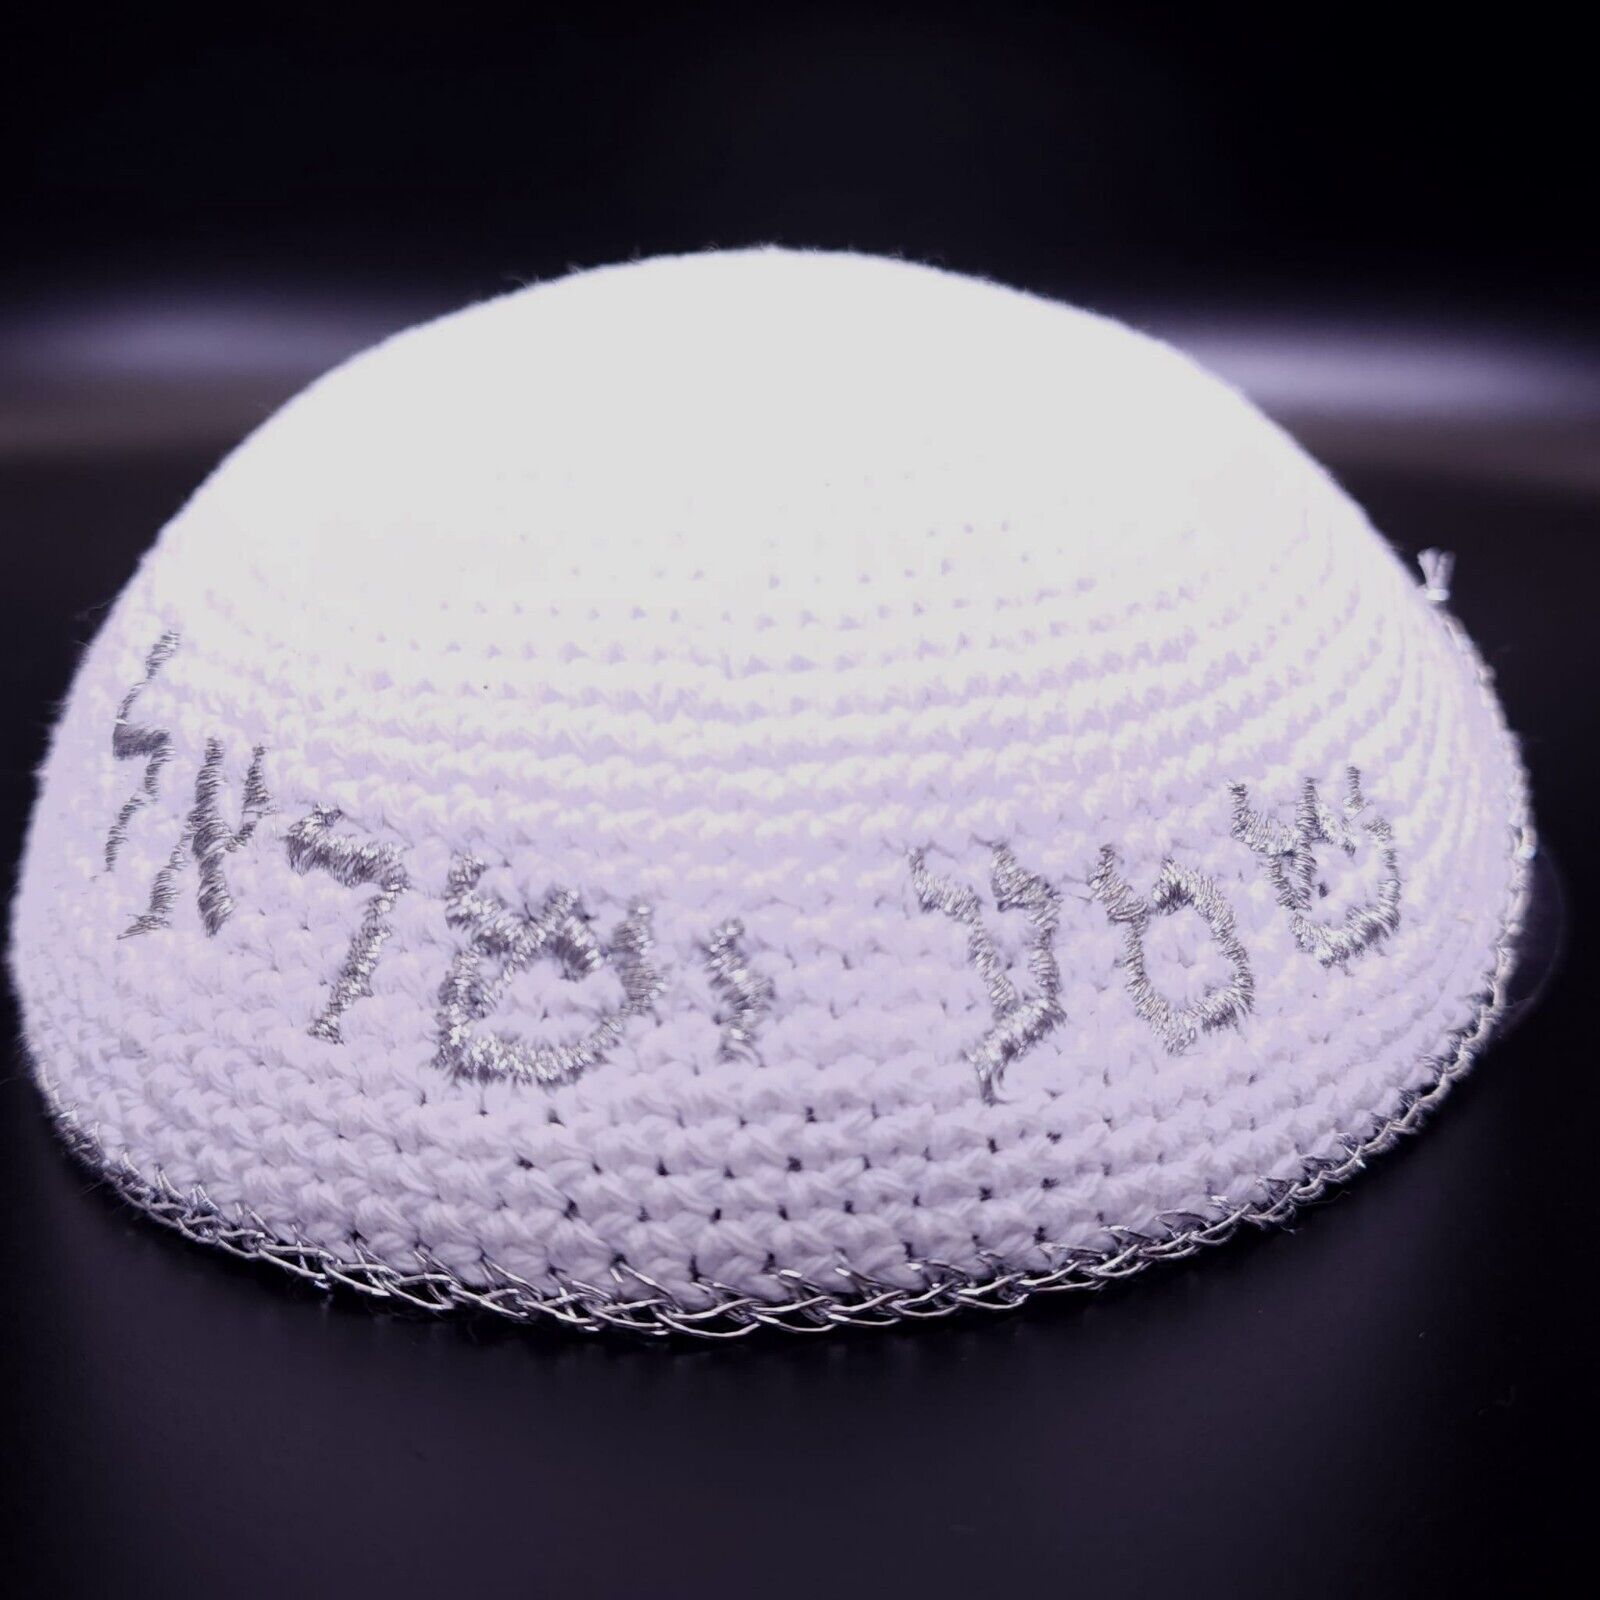 Yarmulke White Embroidered Shema Israel Knitted Silver Kippa Jewish Hat covering